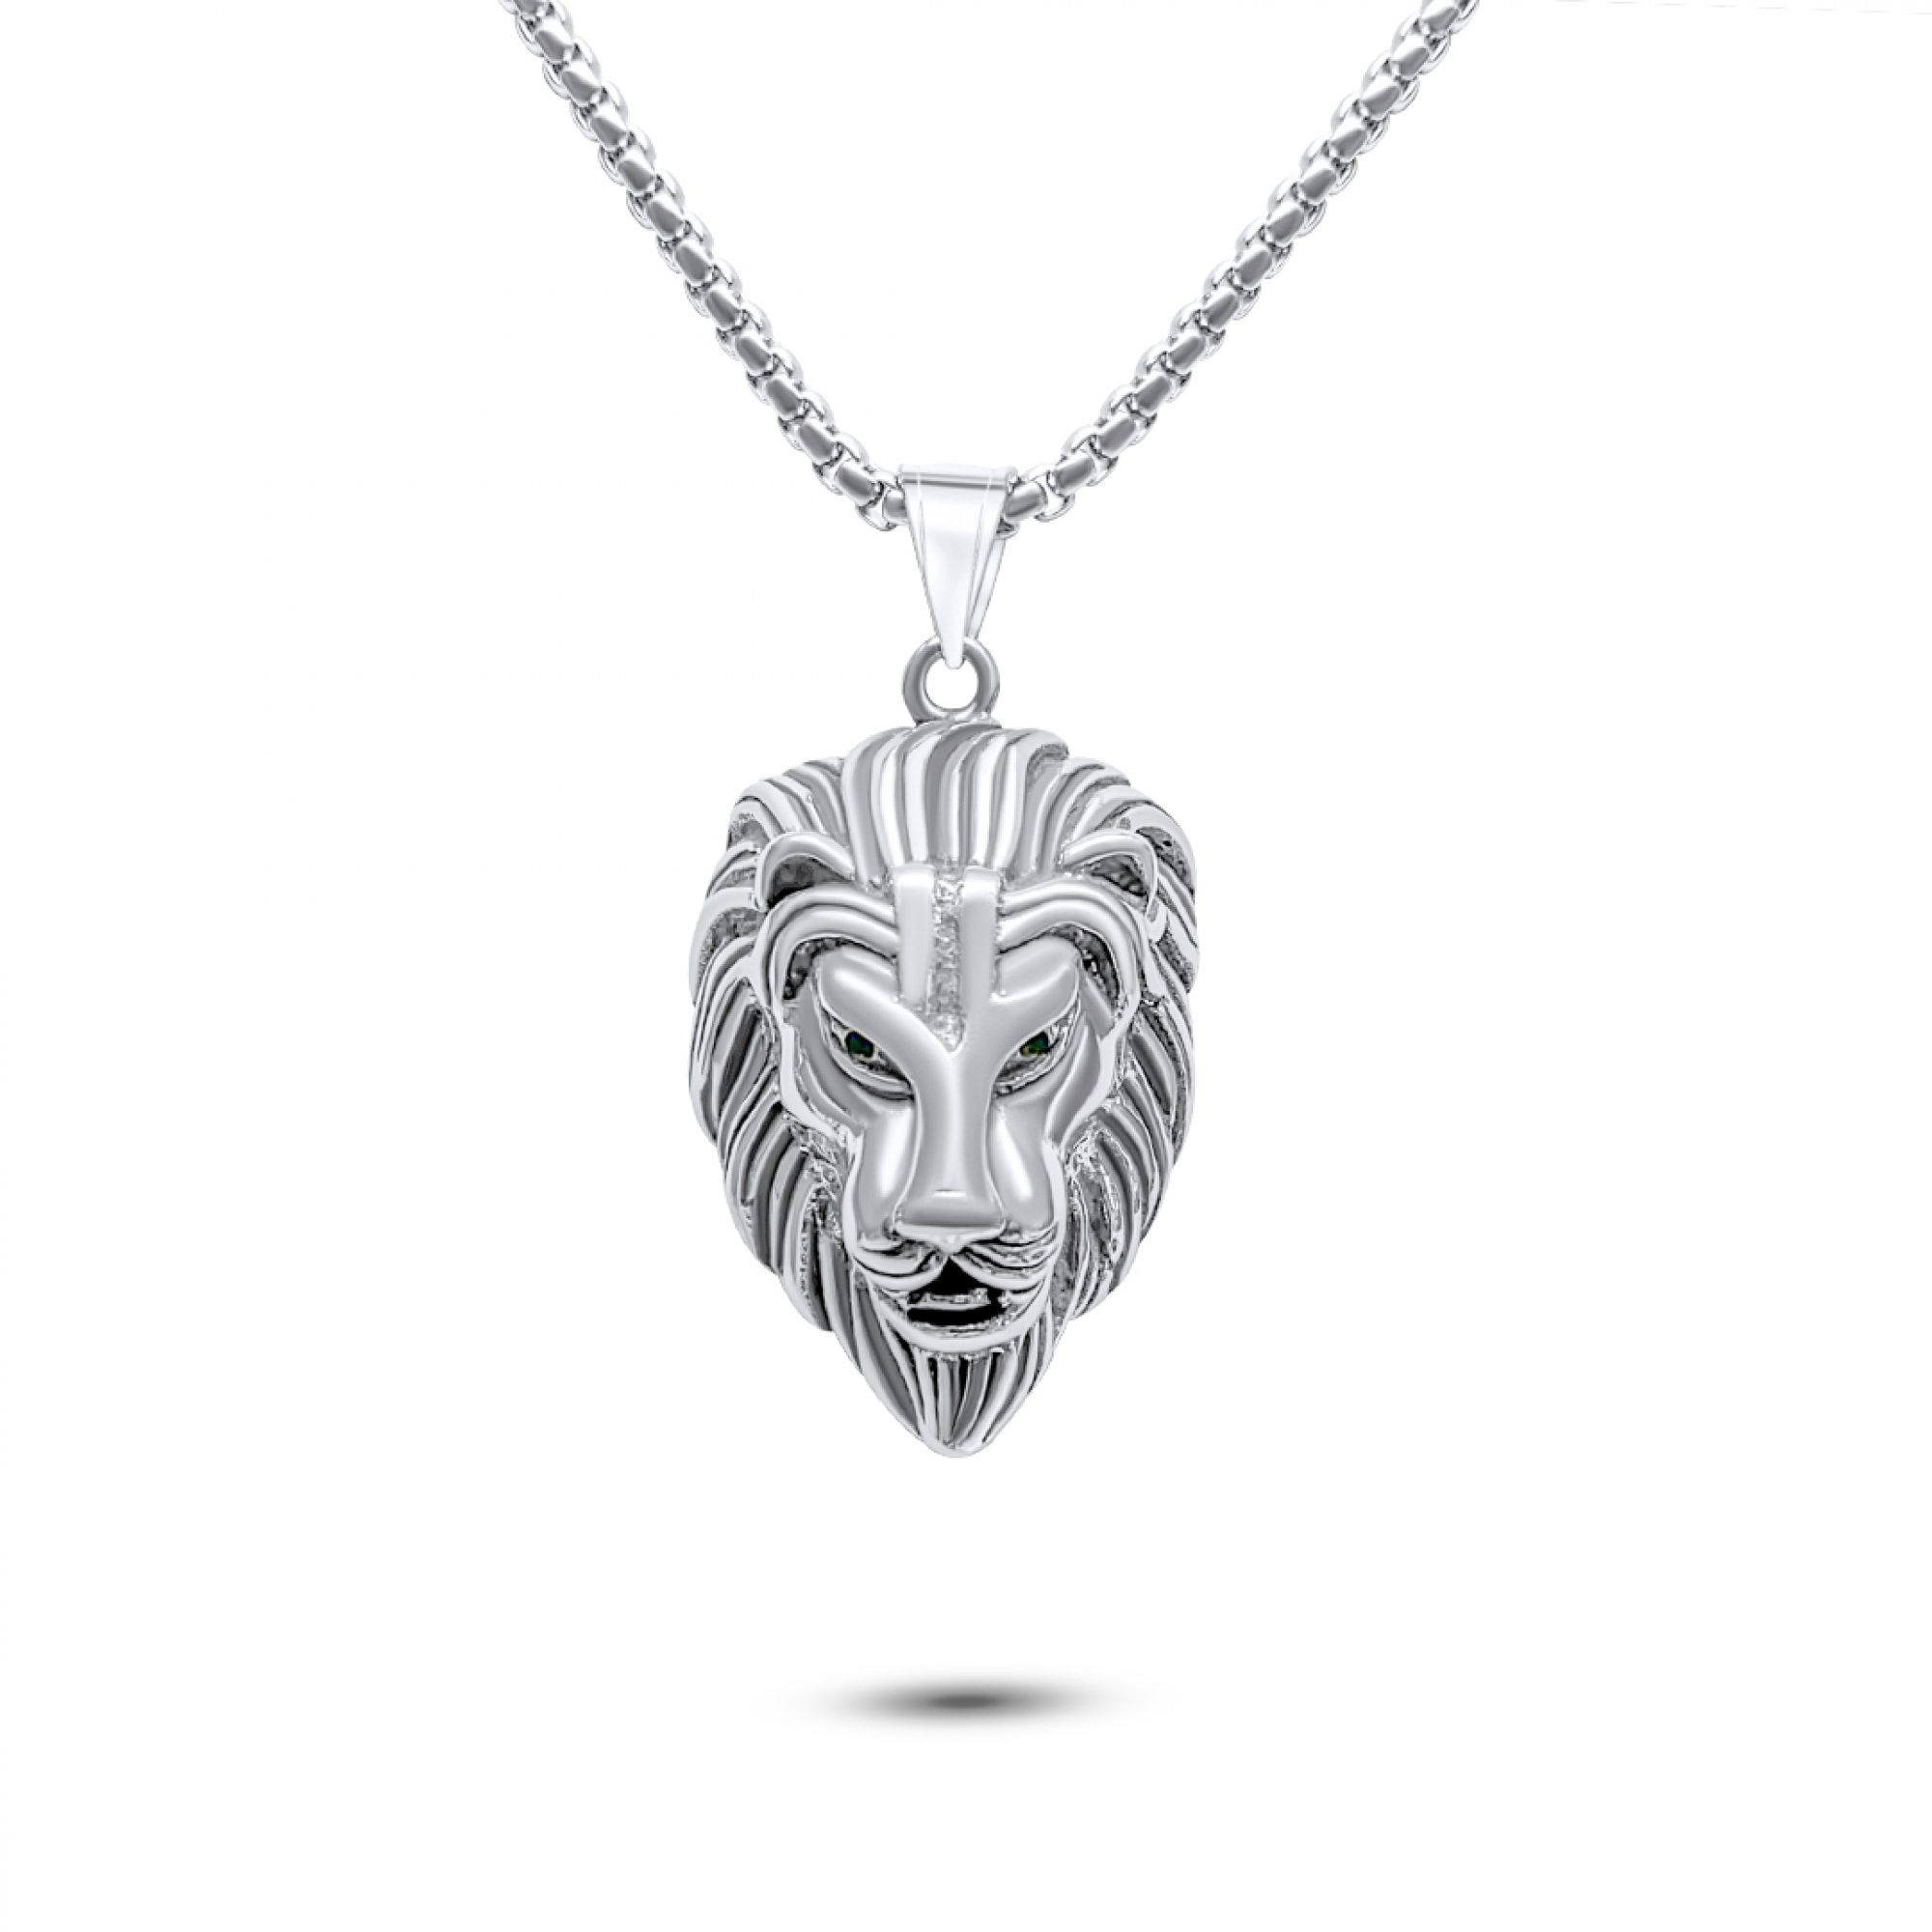 Steel lion necklace